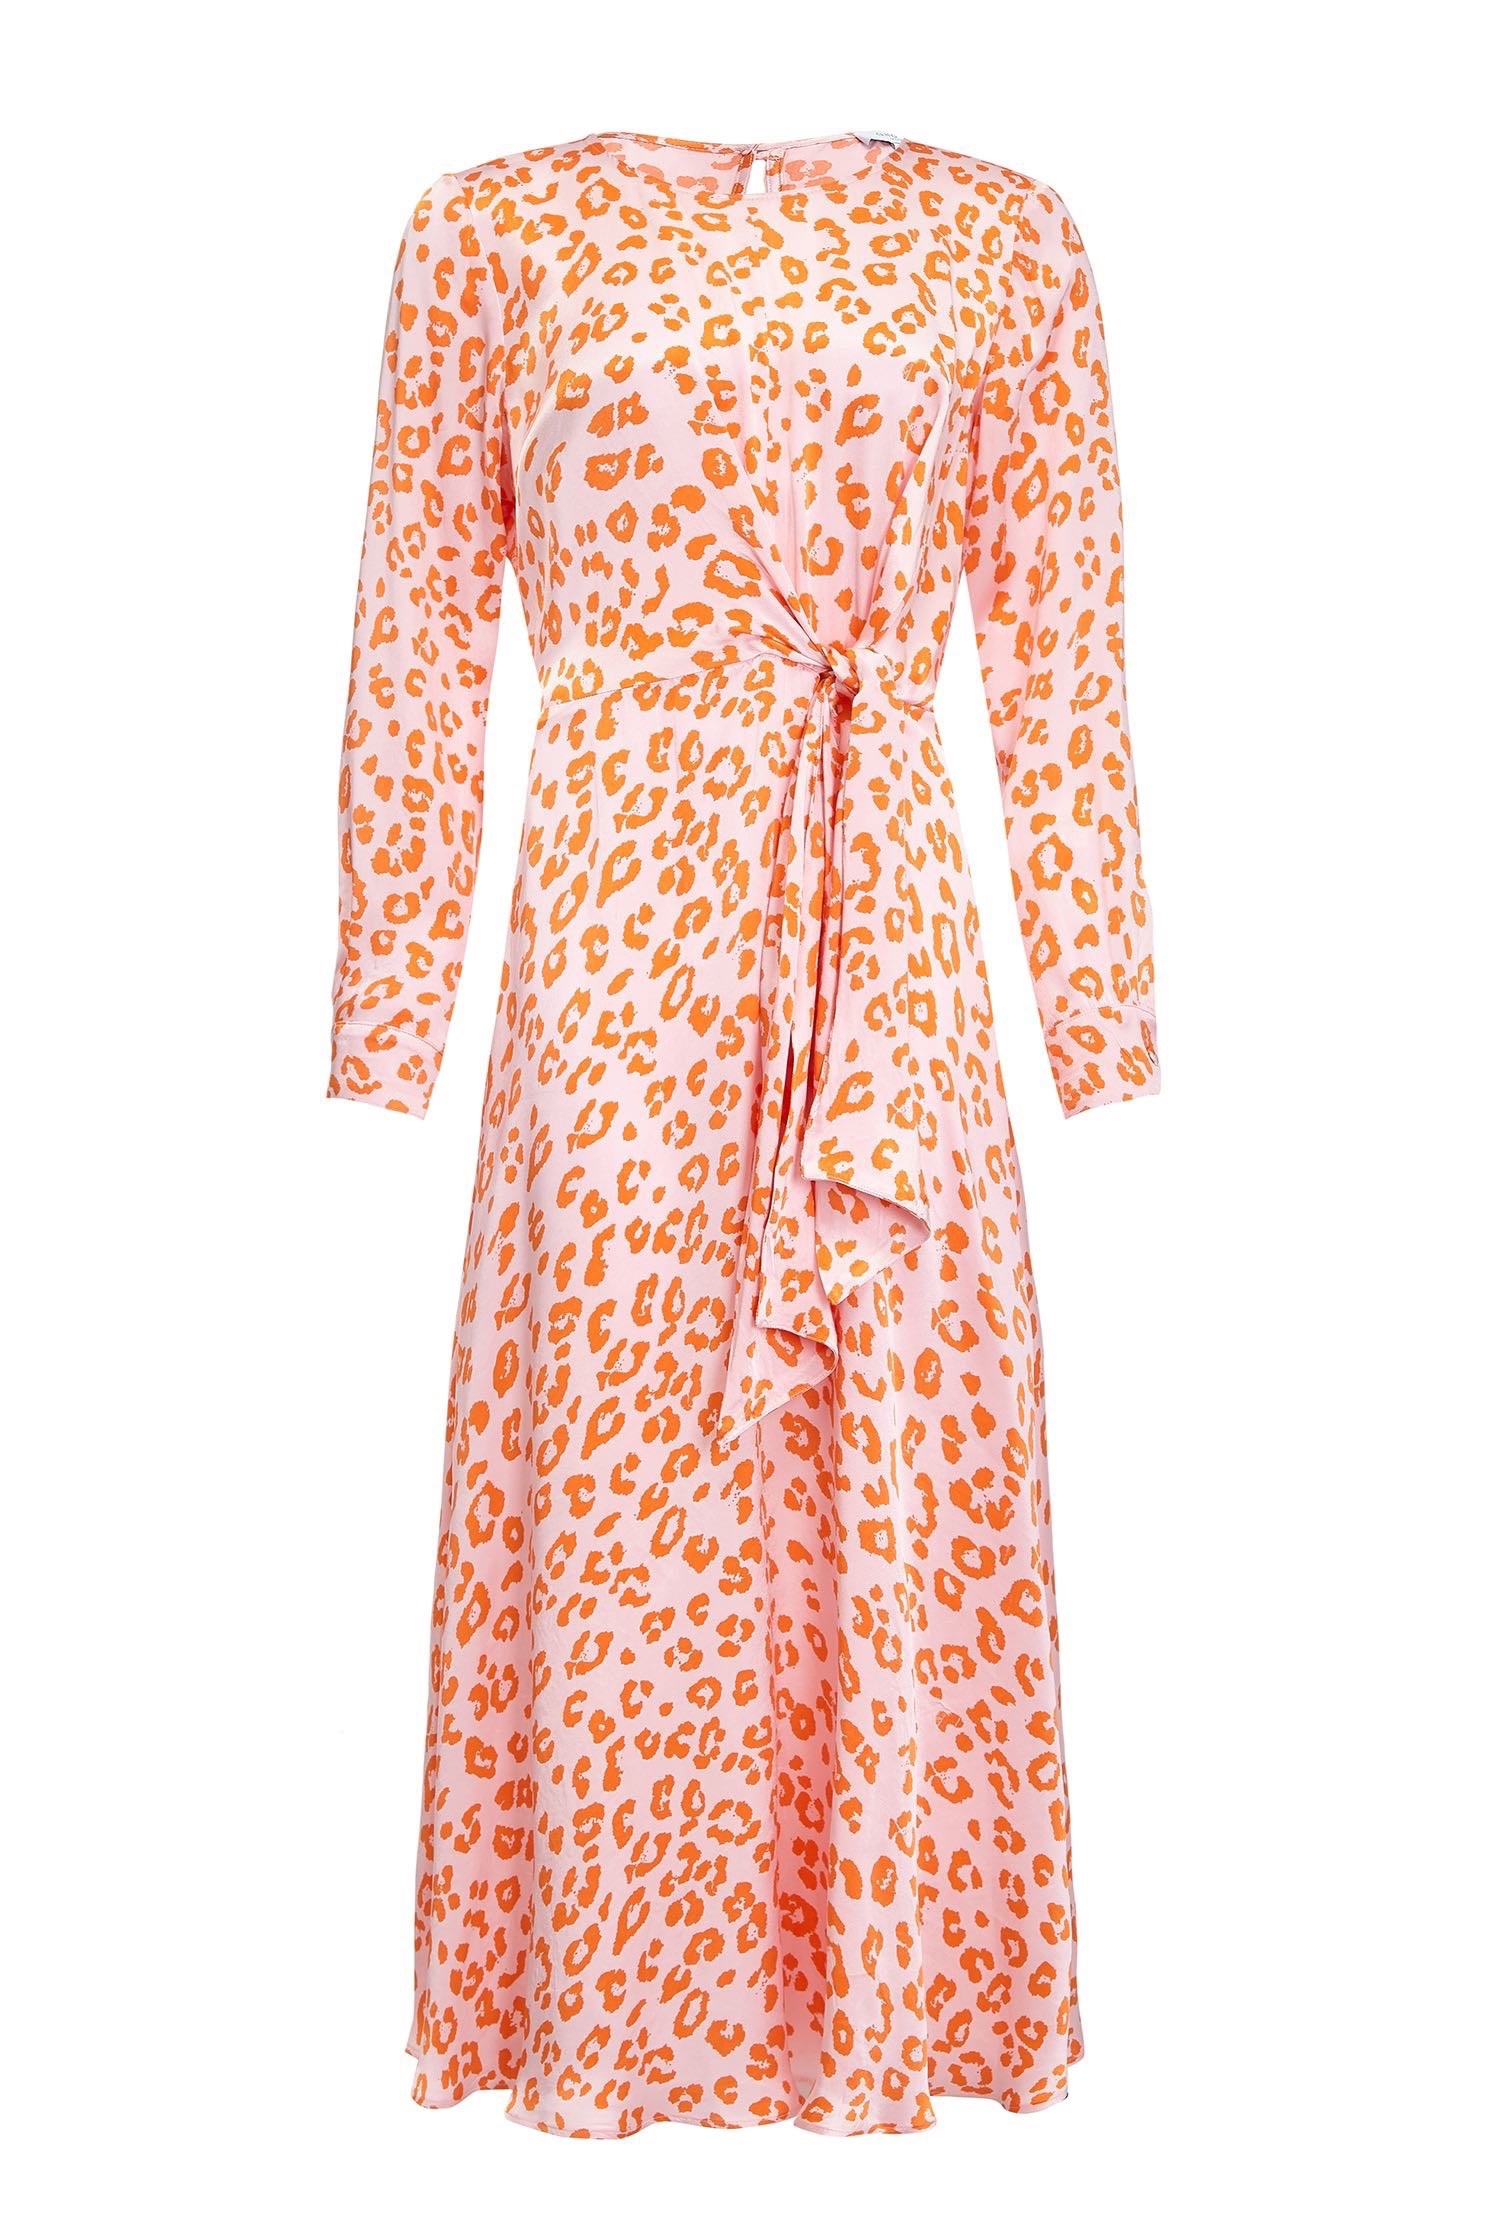 Mindy Satin Midi Dress with Orange Cheetah Print | Ghost London